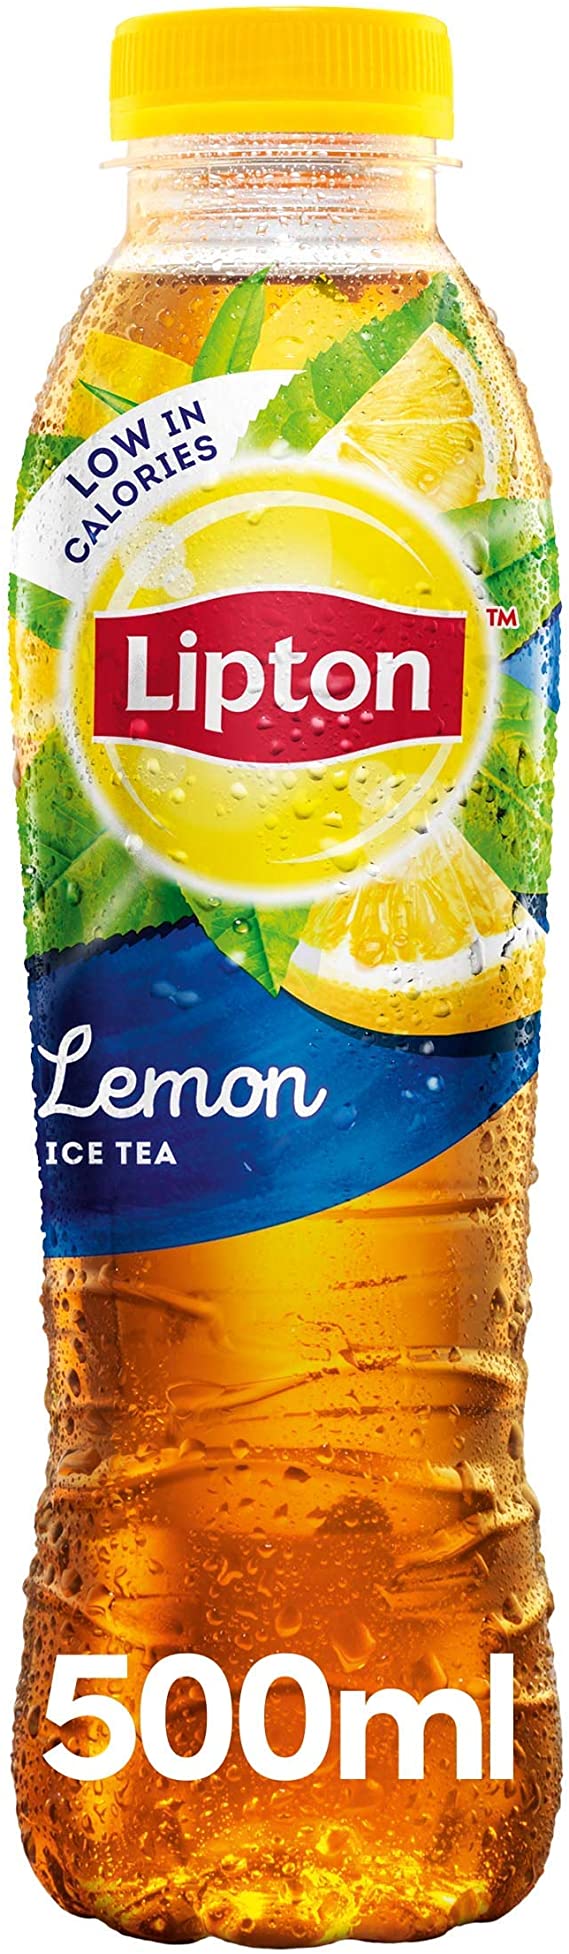 LIPTON ICE TEA LEMON